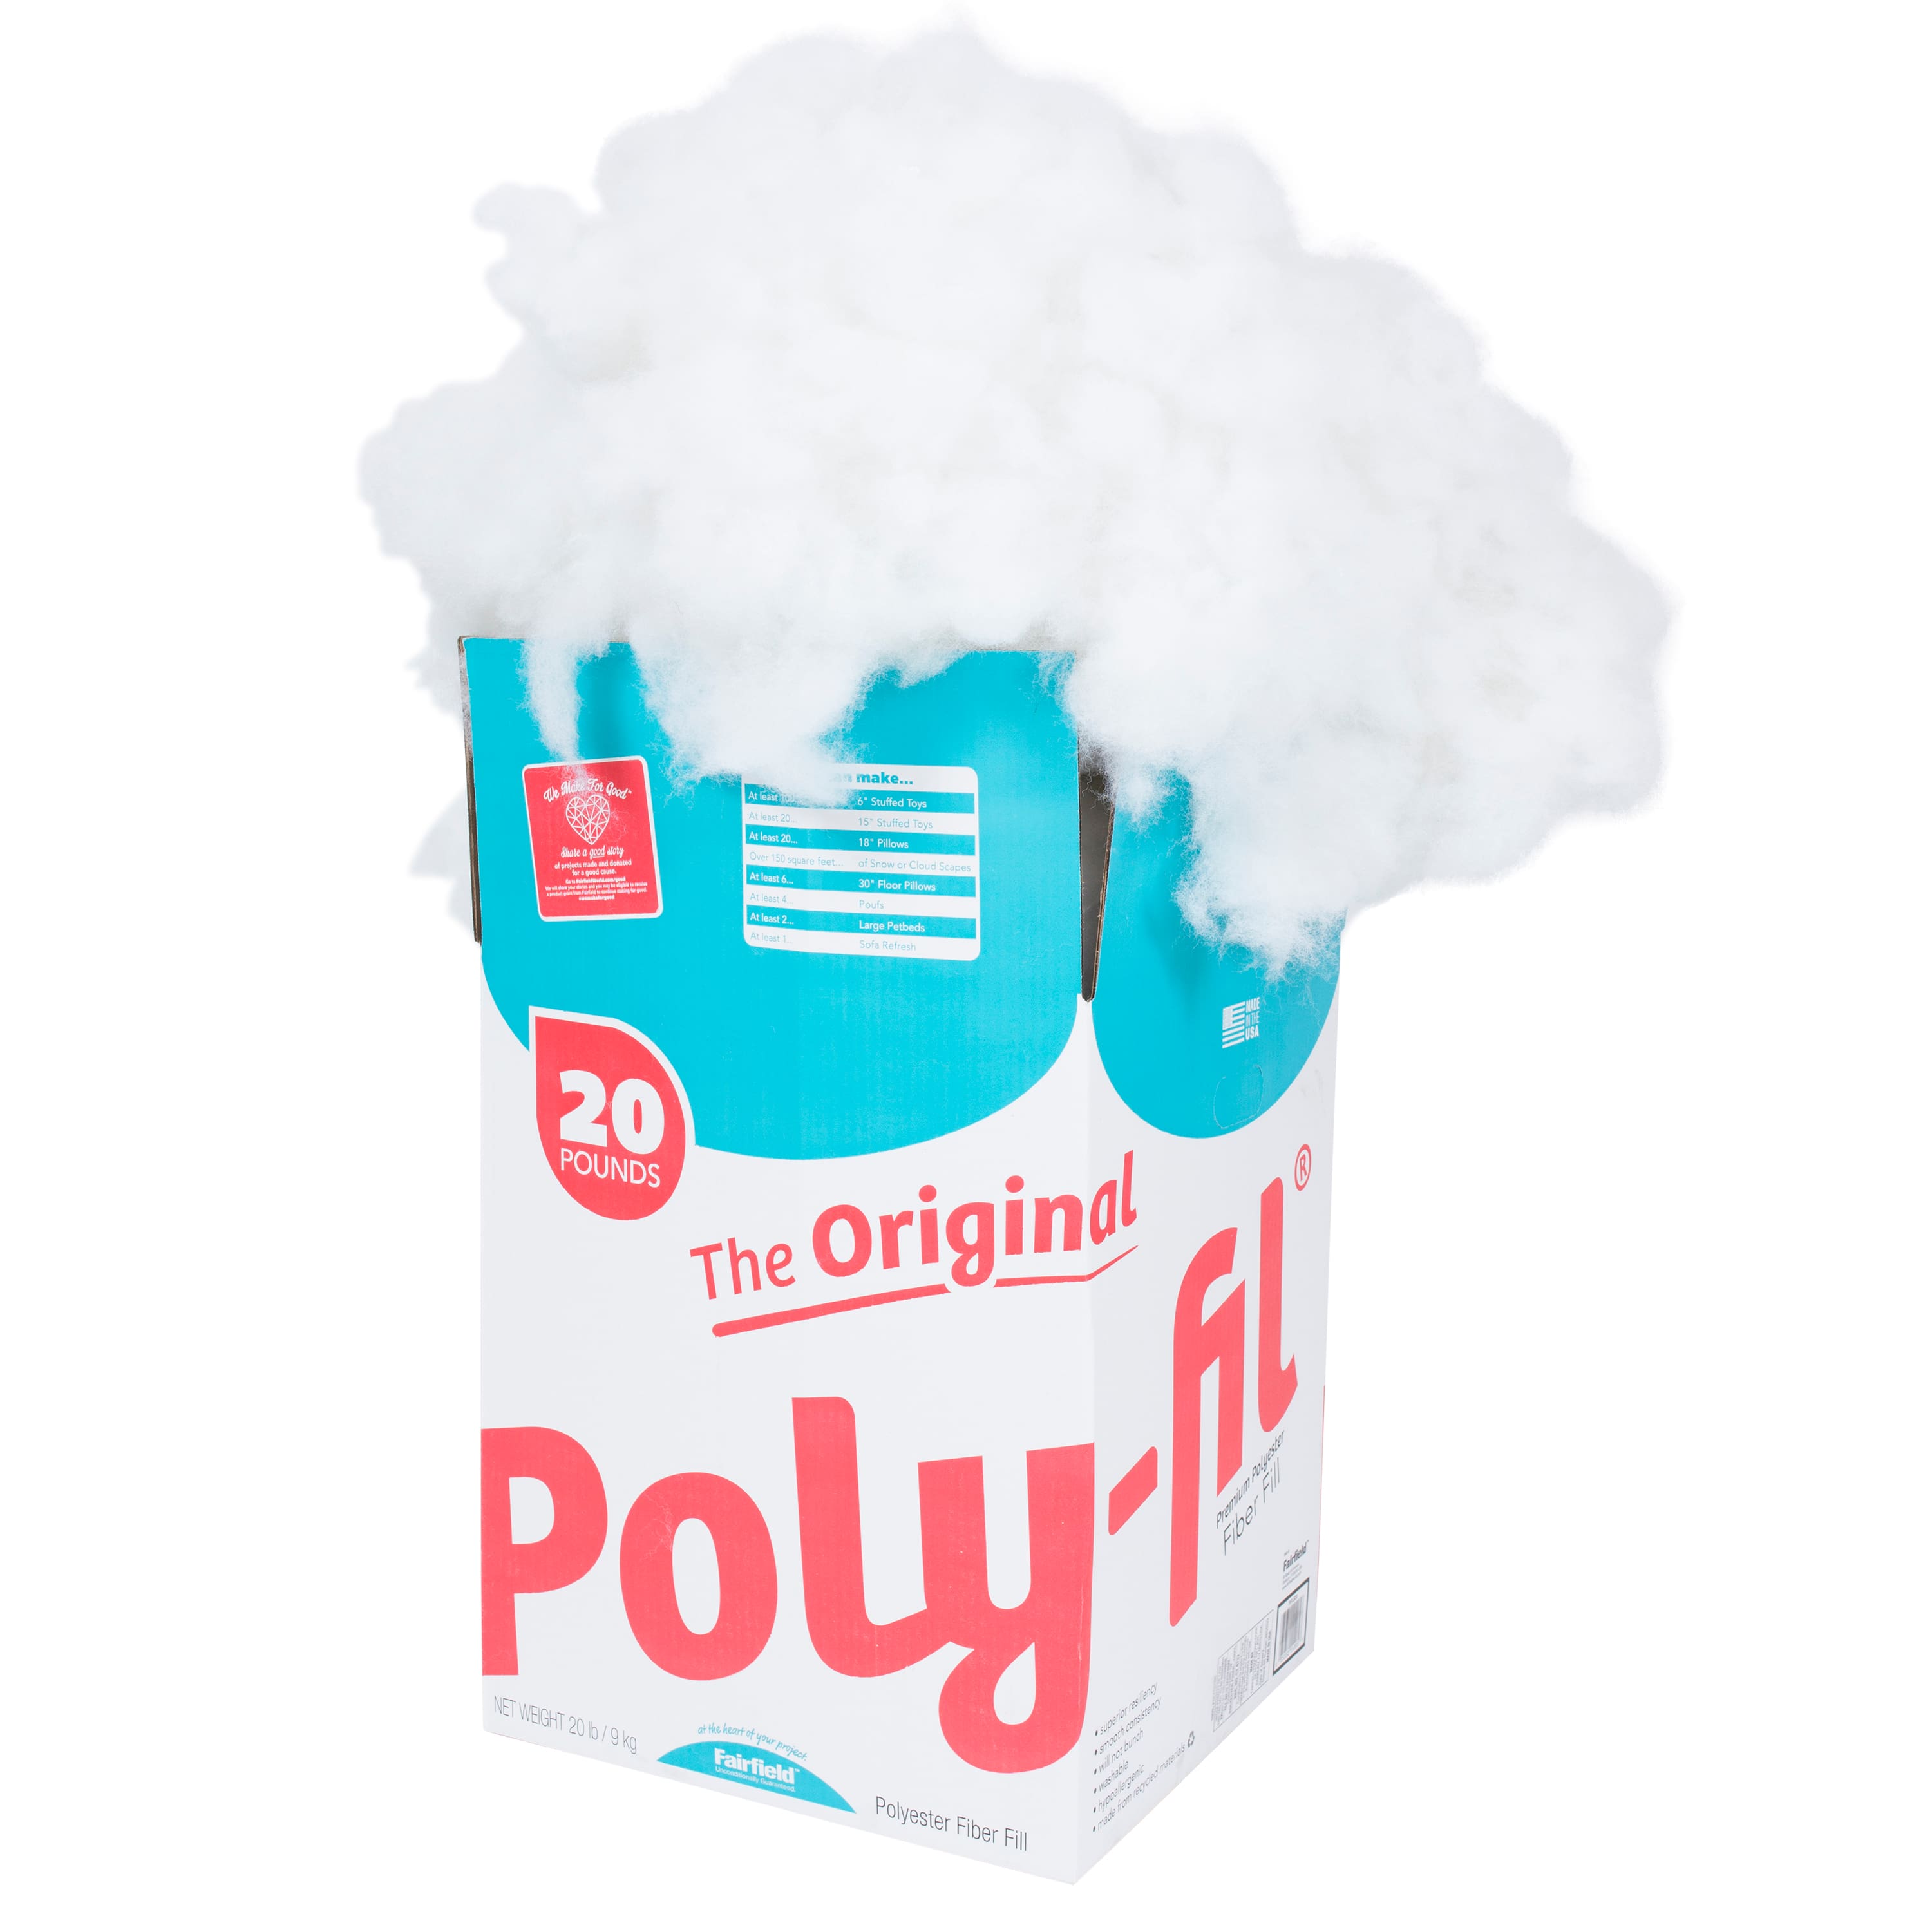 The Original Poly-Fil Premium Box, 20 lb - What it looks like! 